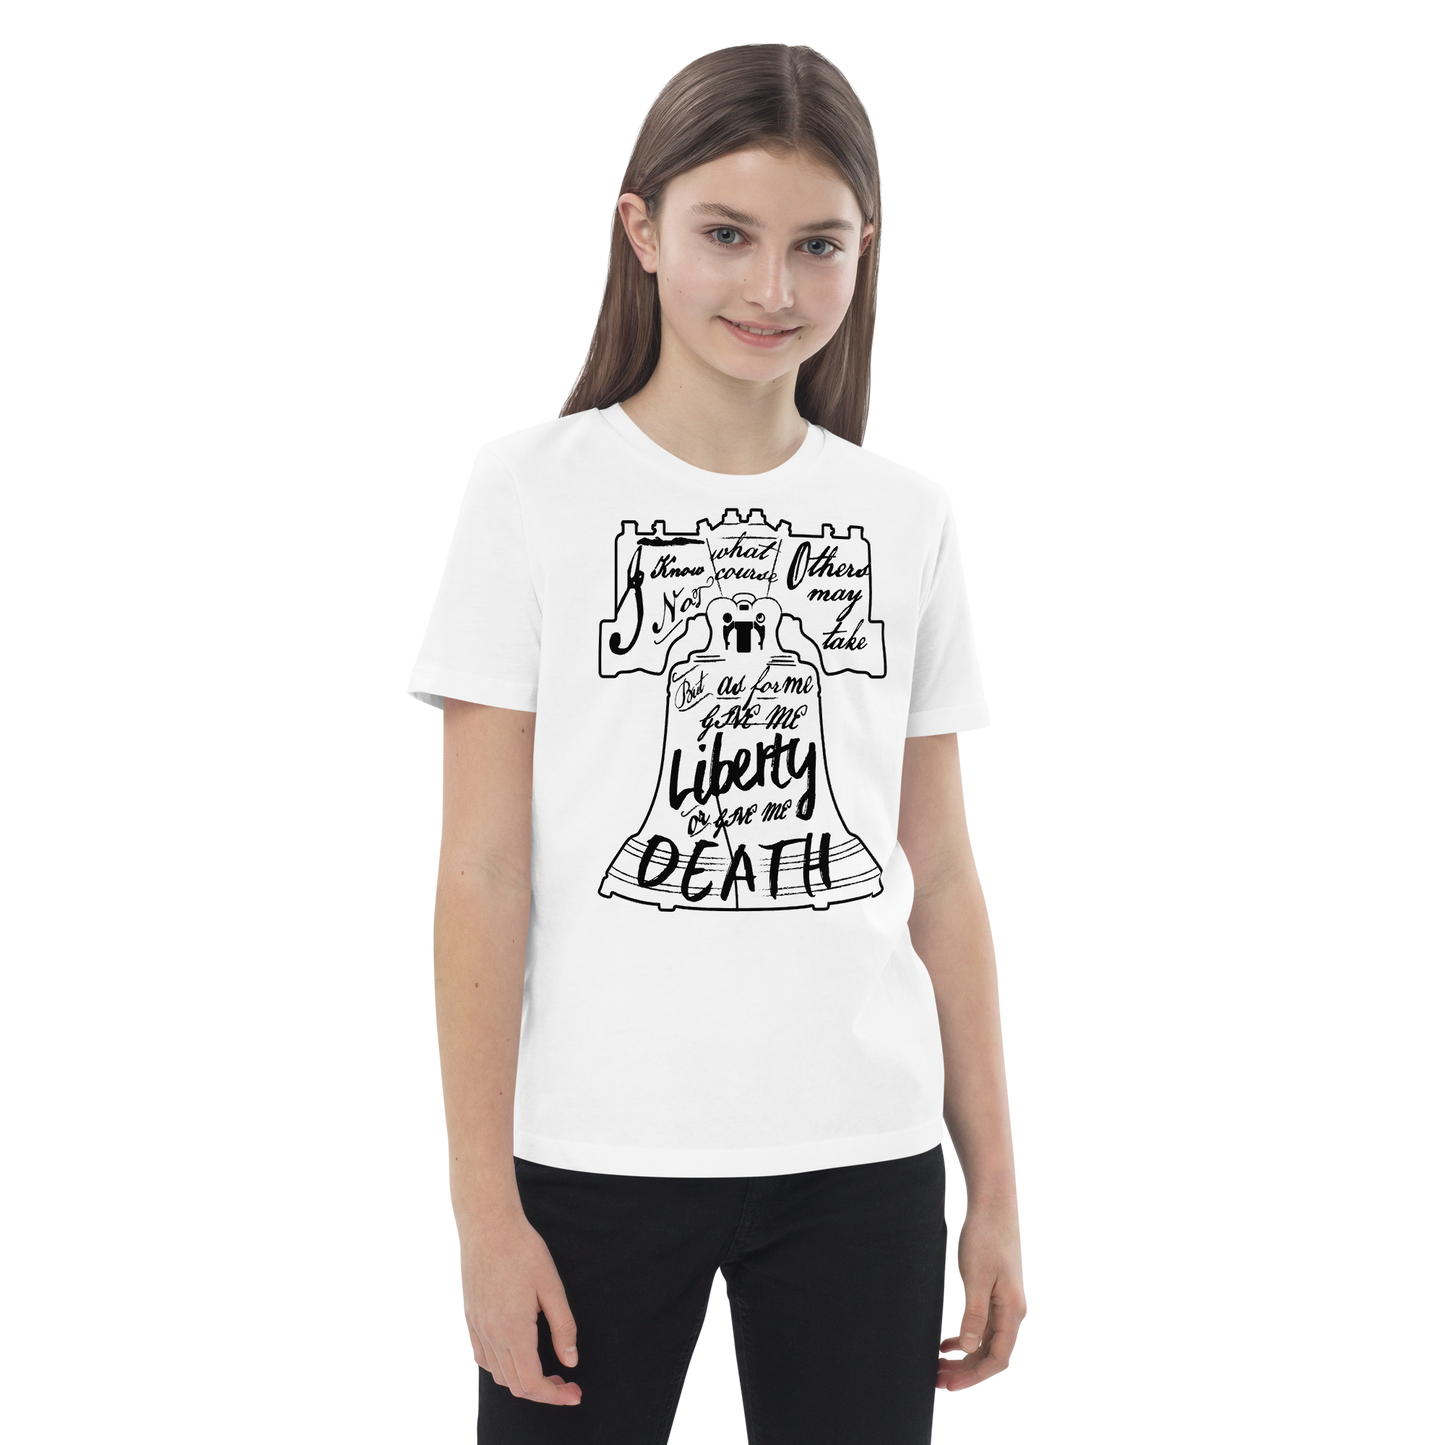 Liberty Bell organic cotton kids t-shirt